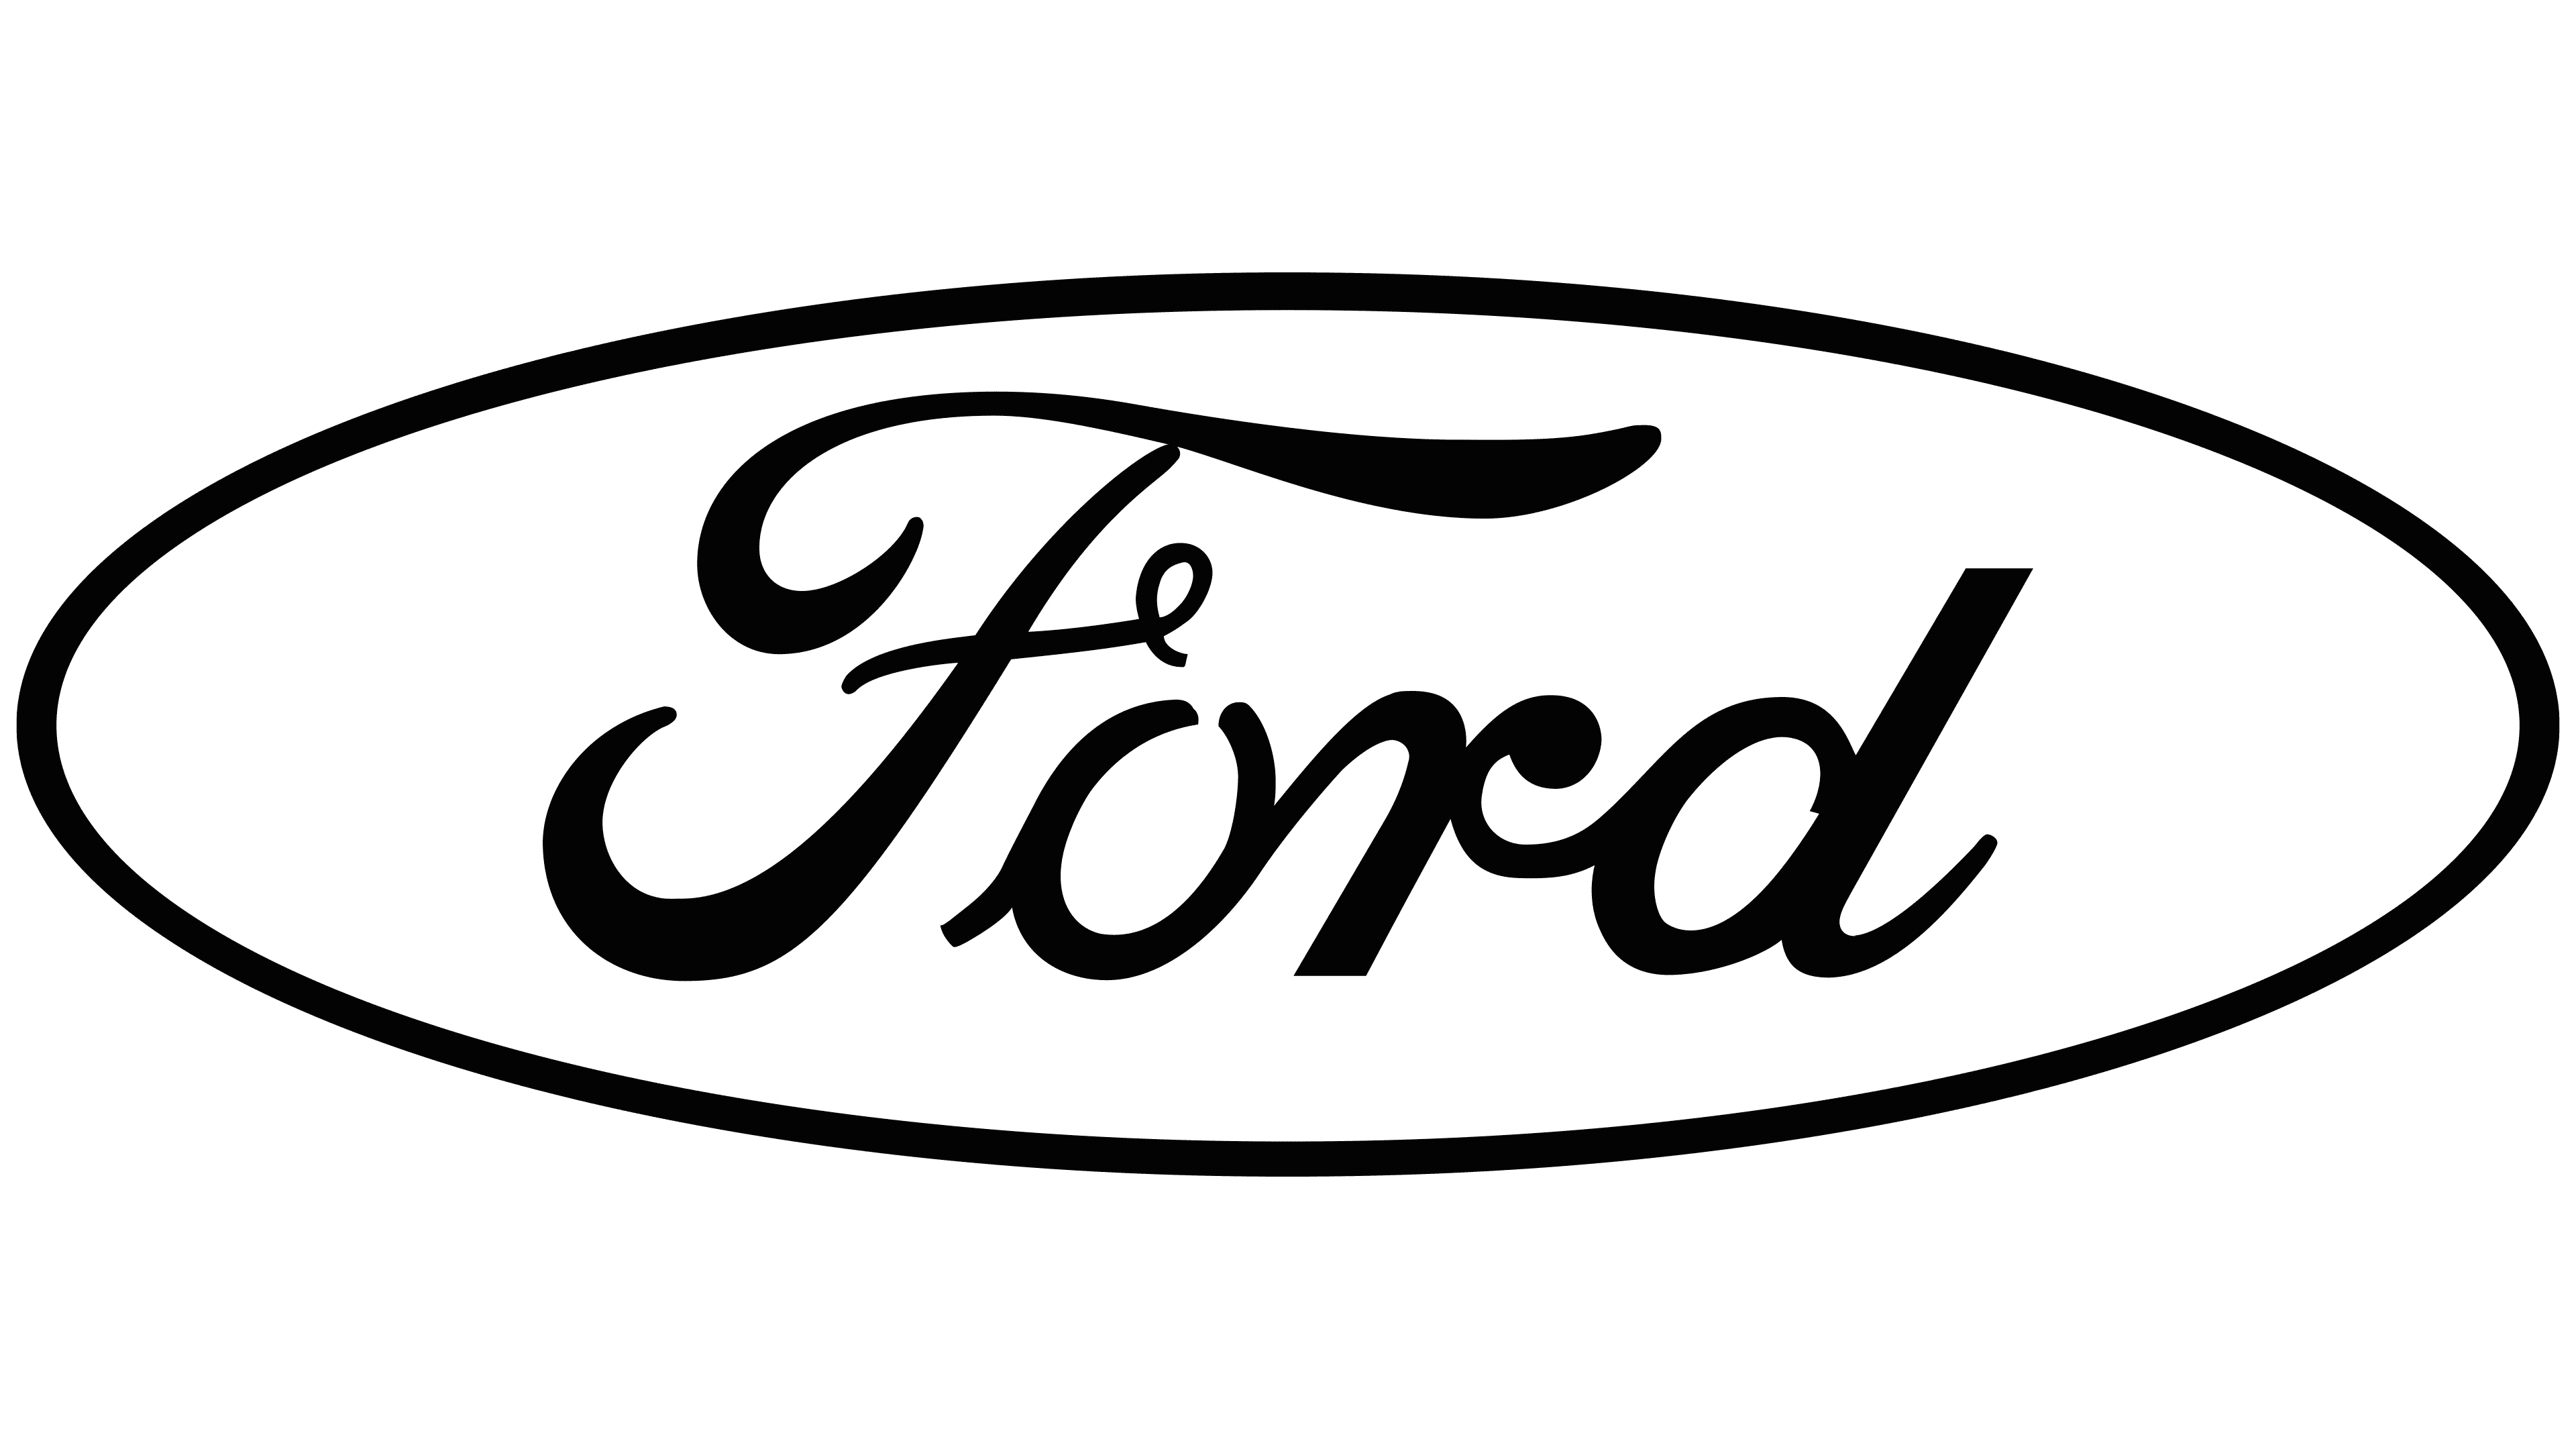 Ford brand logo symbol name blue design car usa Vector Image, logo ford 